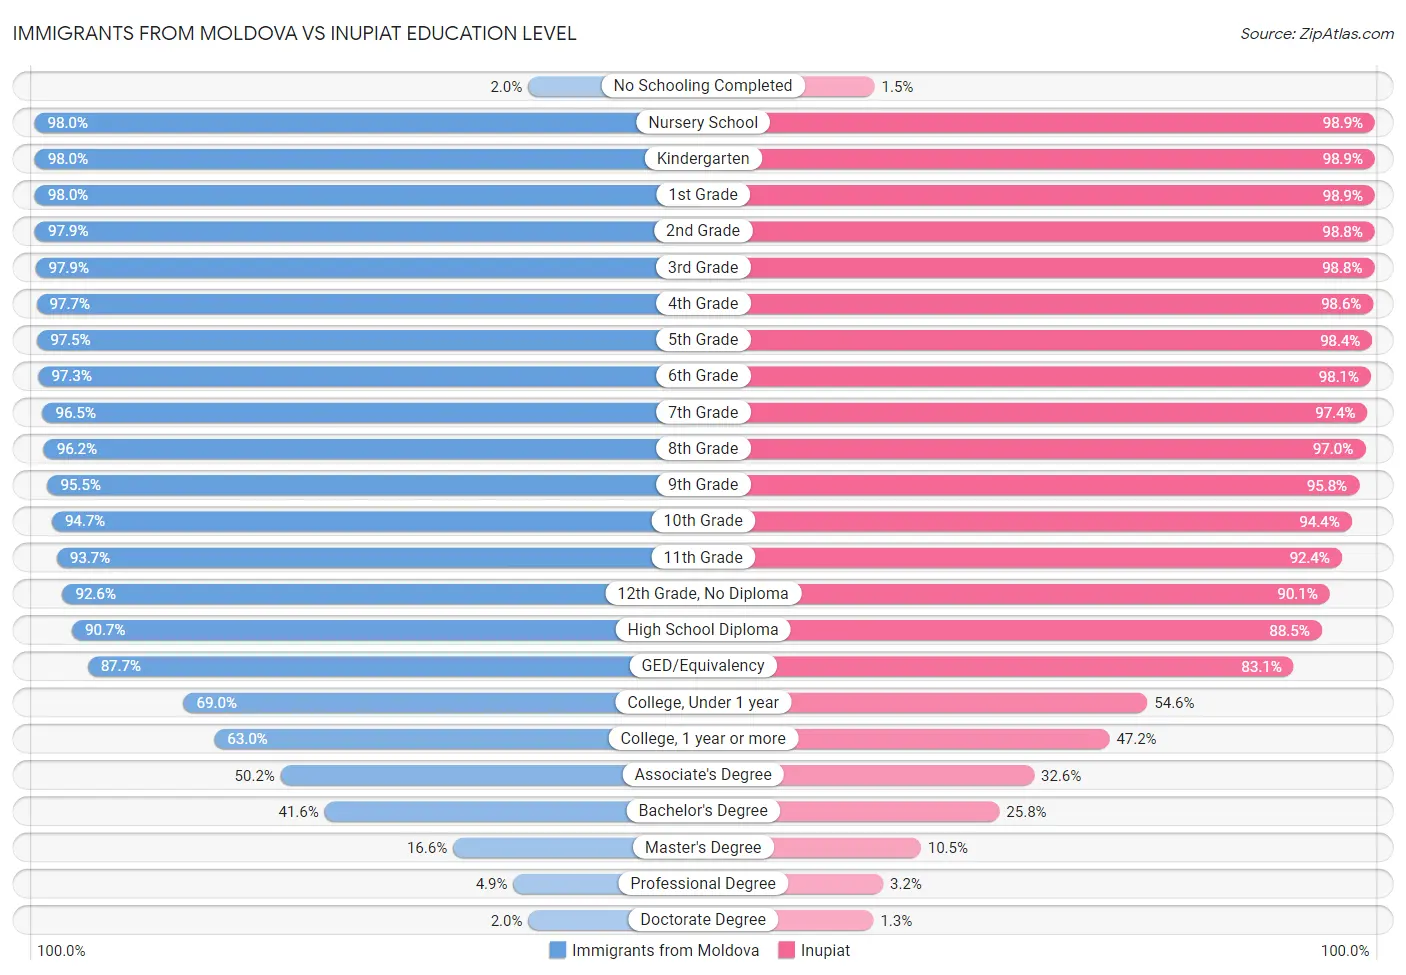 Immigrants from Moldova vs Inupiat Education Level